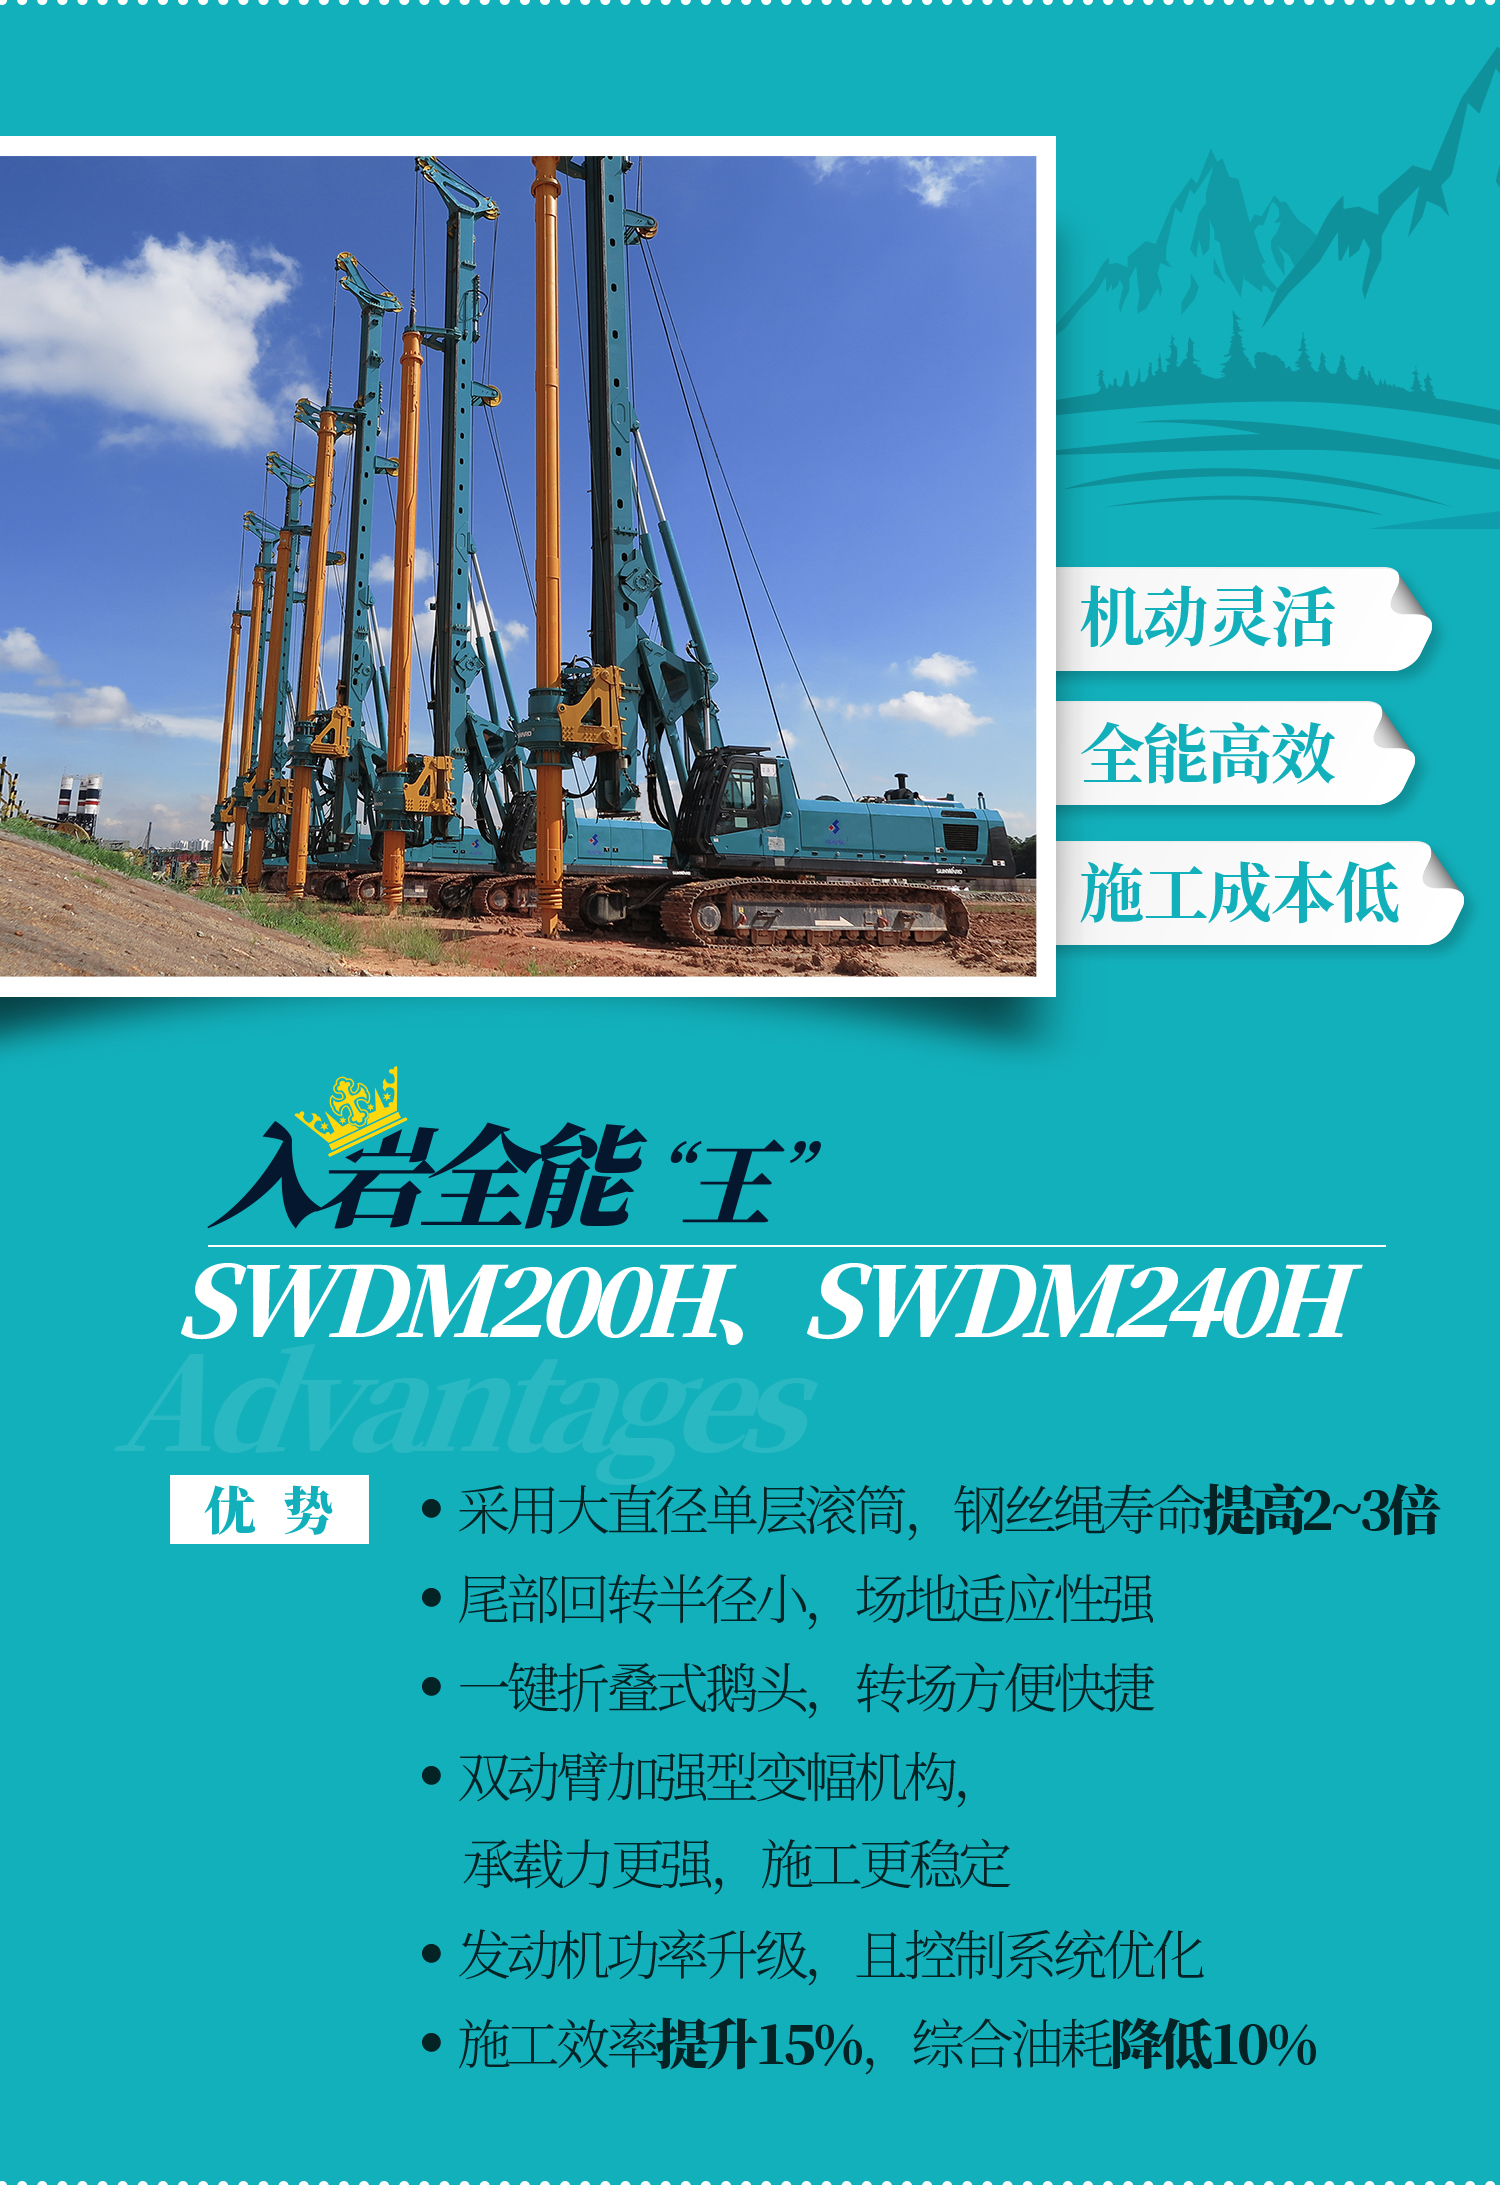 SWDM240H 中型多功能旋挖钻机